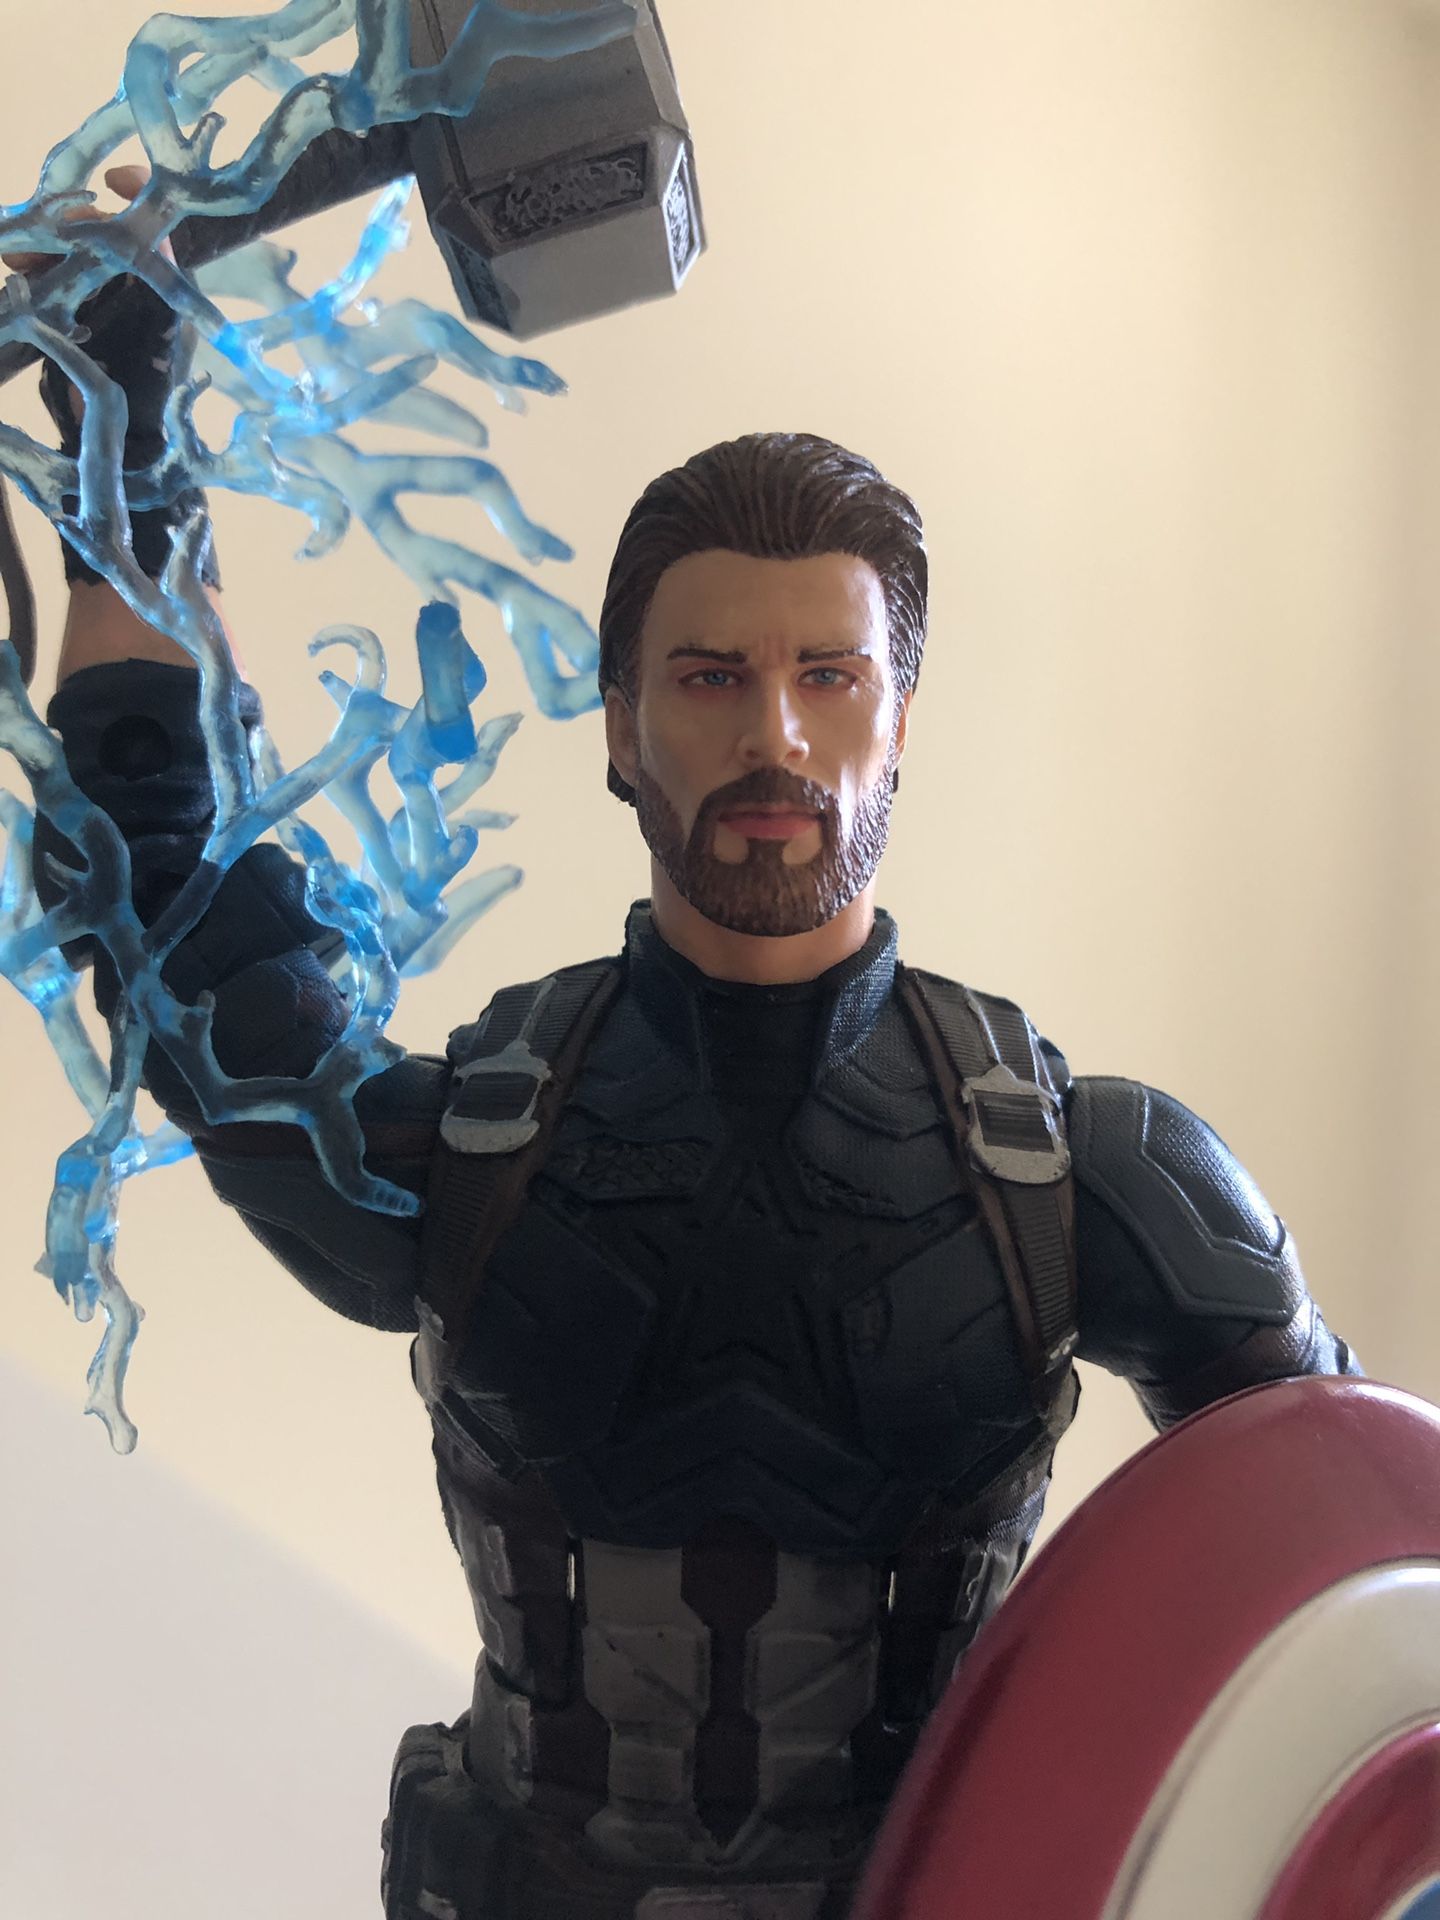 Marvel Legends custom painted Infinity War Captain America head